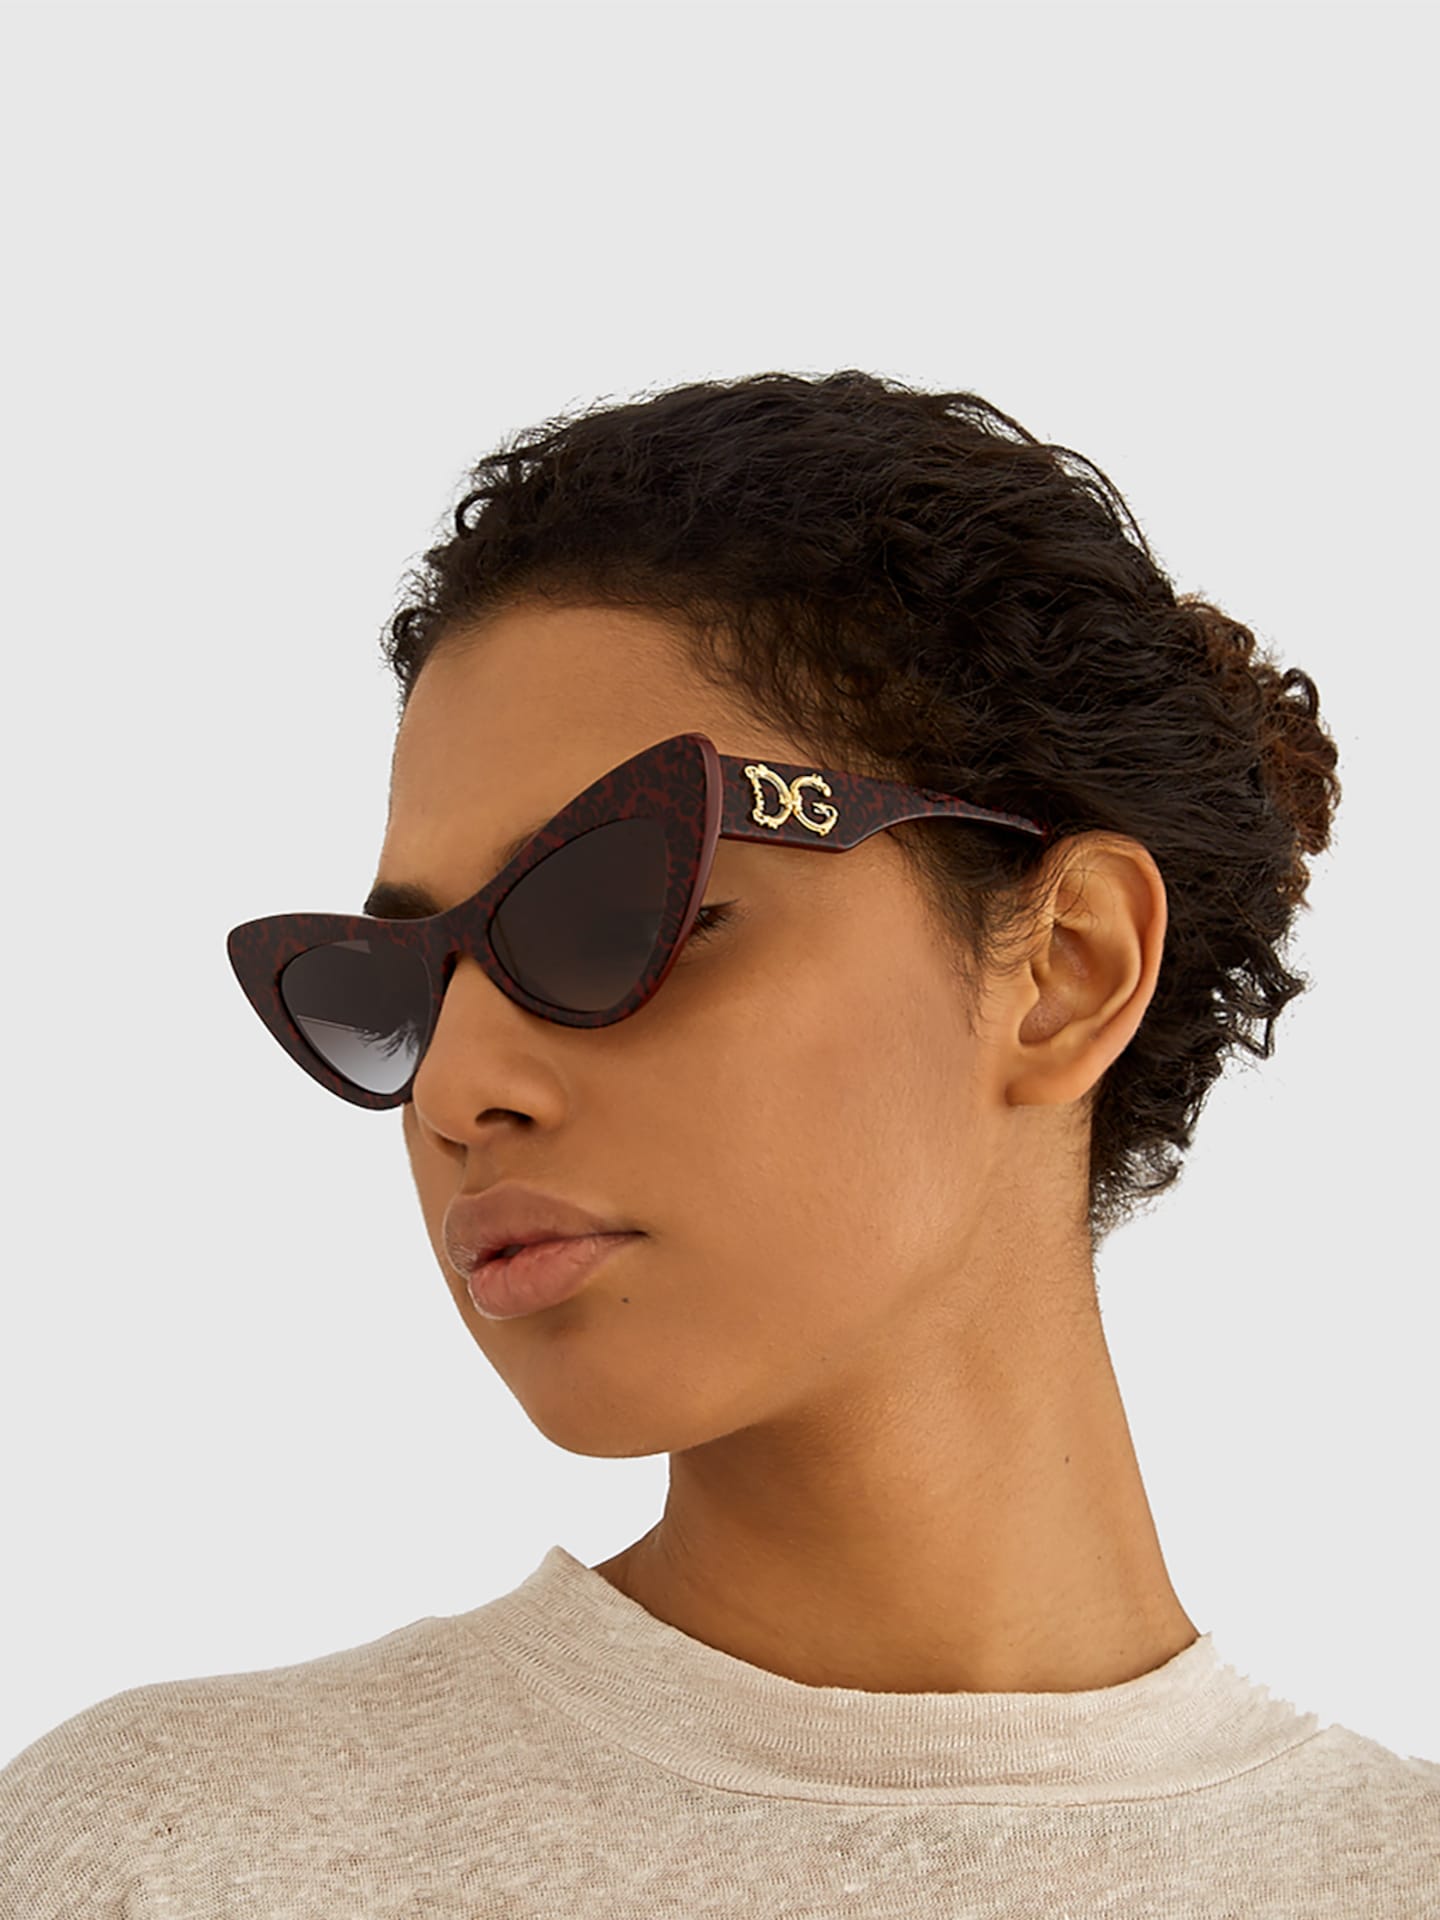 Dolce & Gabbana Damasco Black On Bordeaux Sunglasses | Glasses.com 